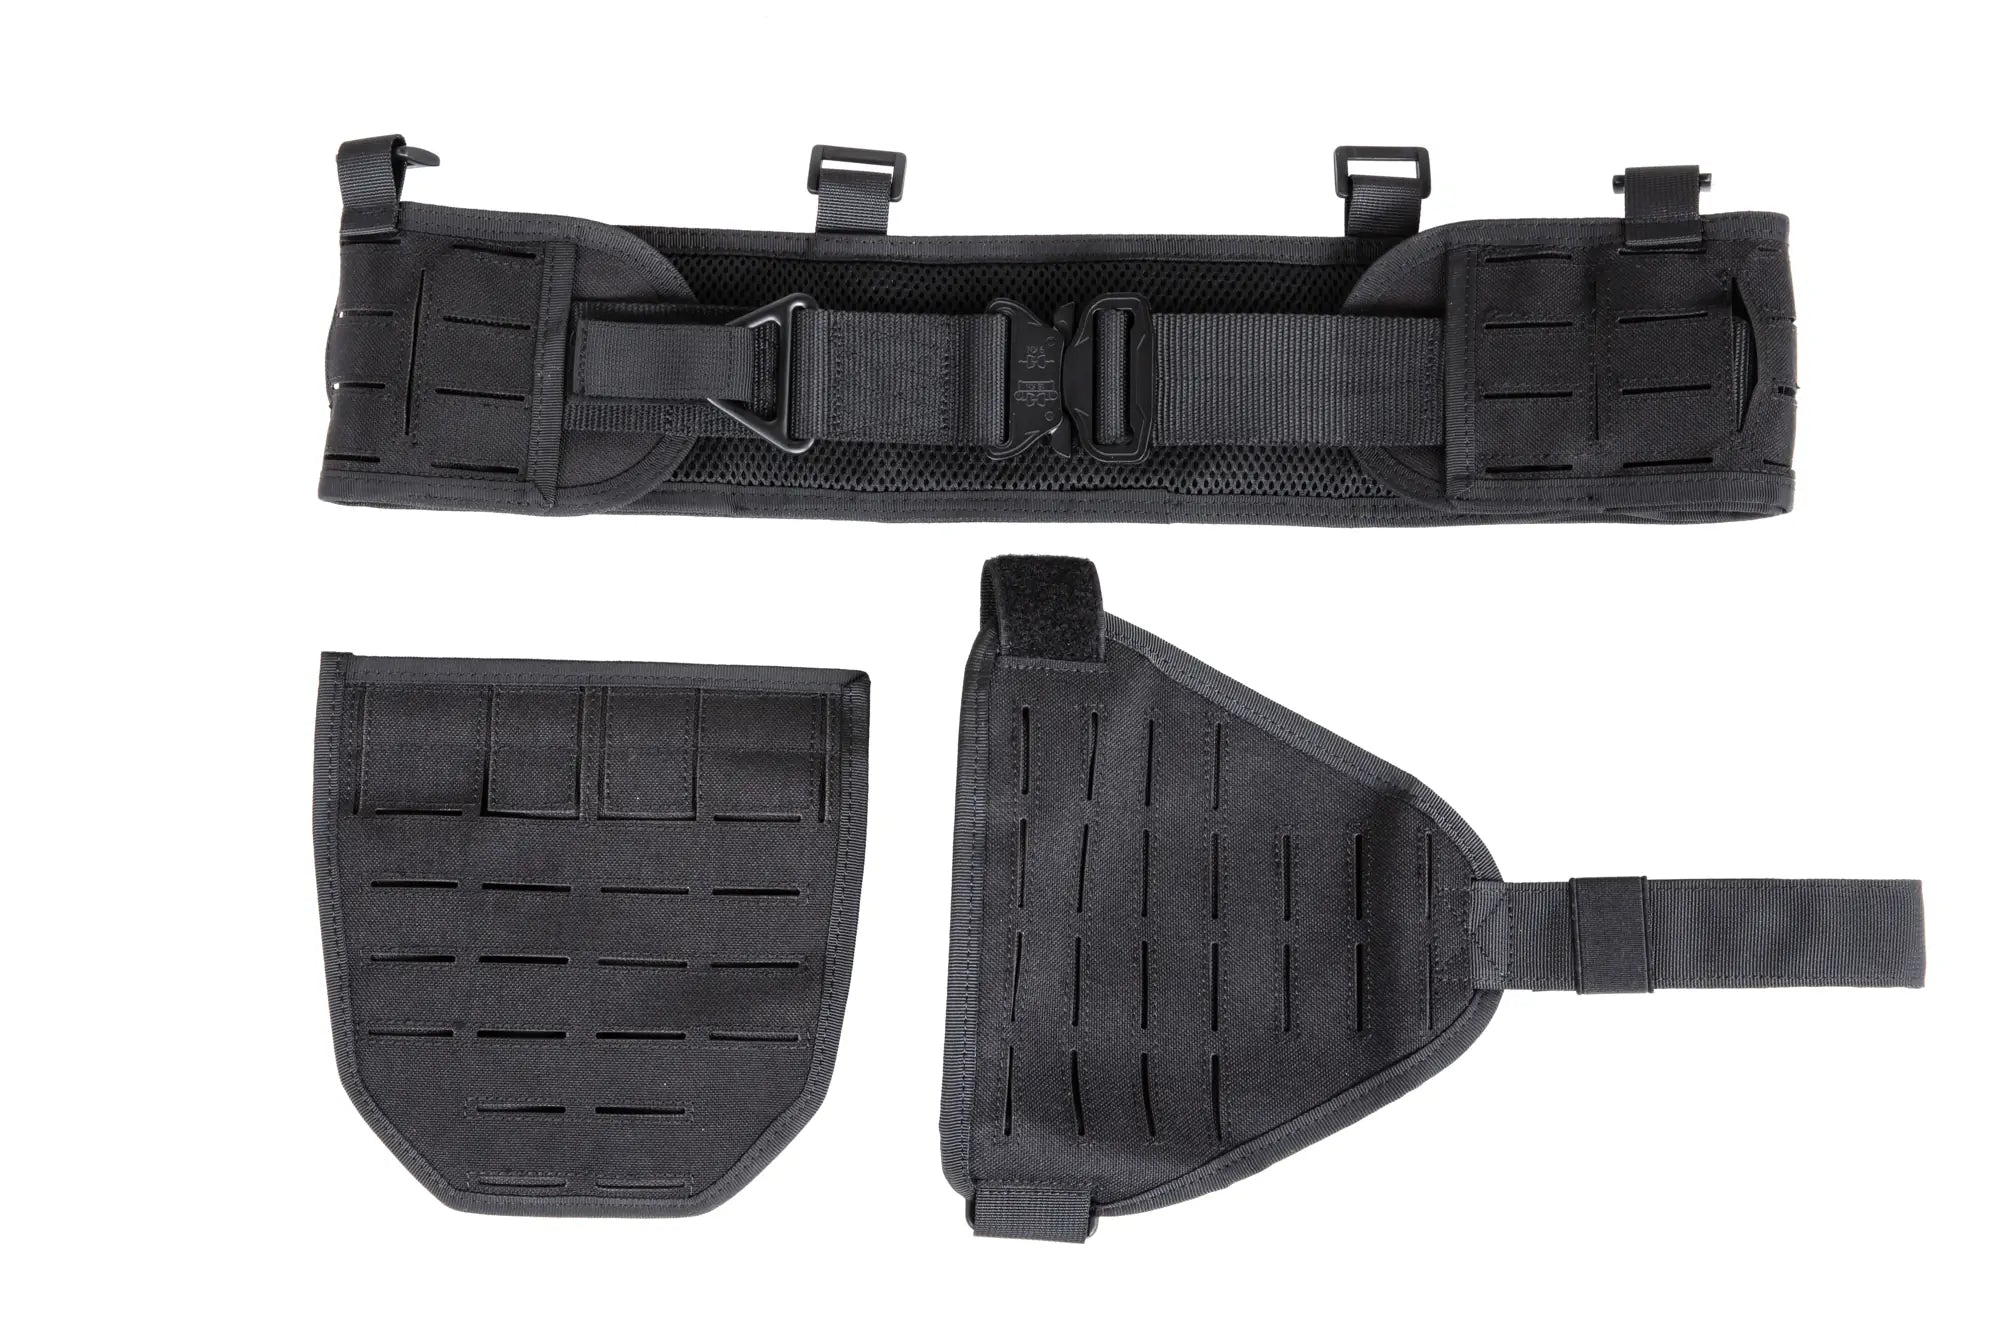 Wosport tactical harness belt Black